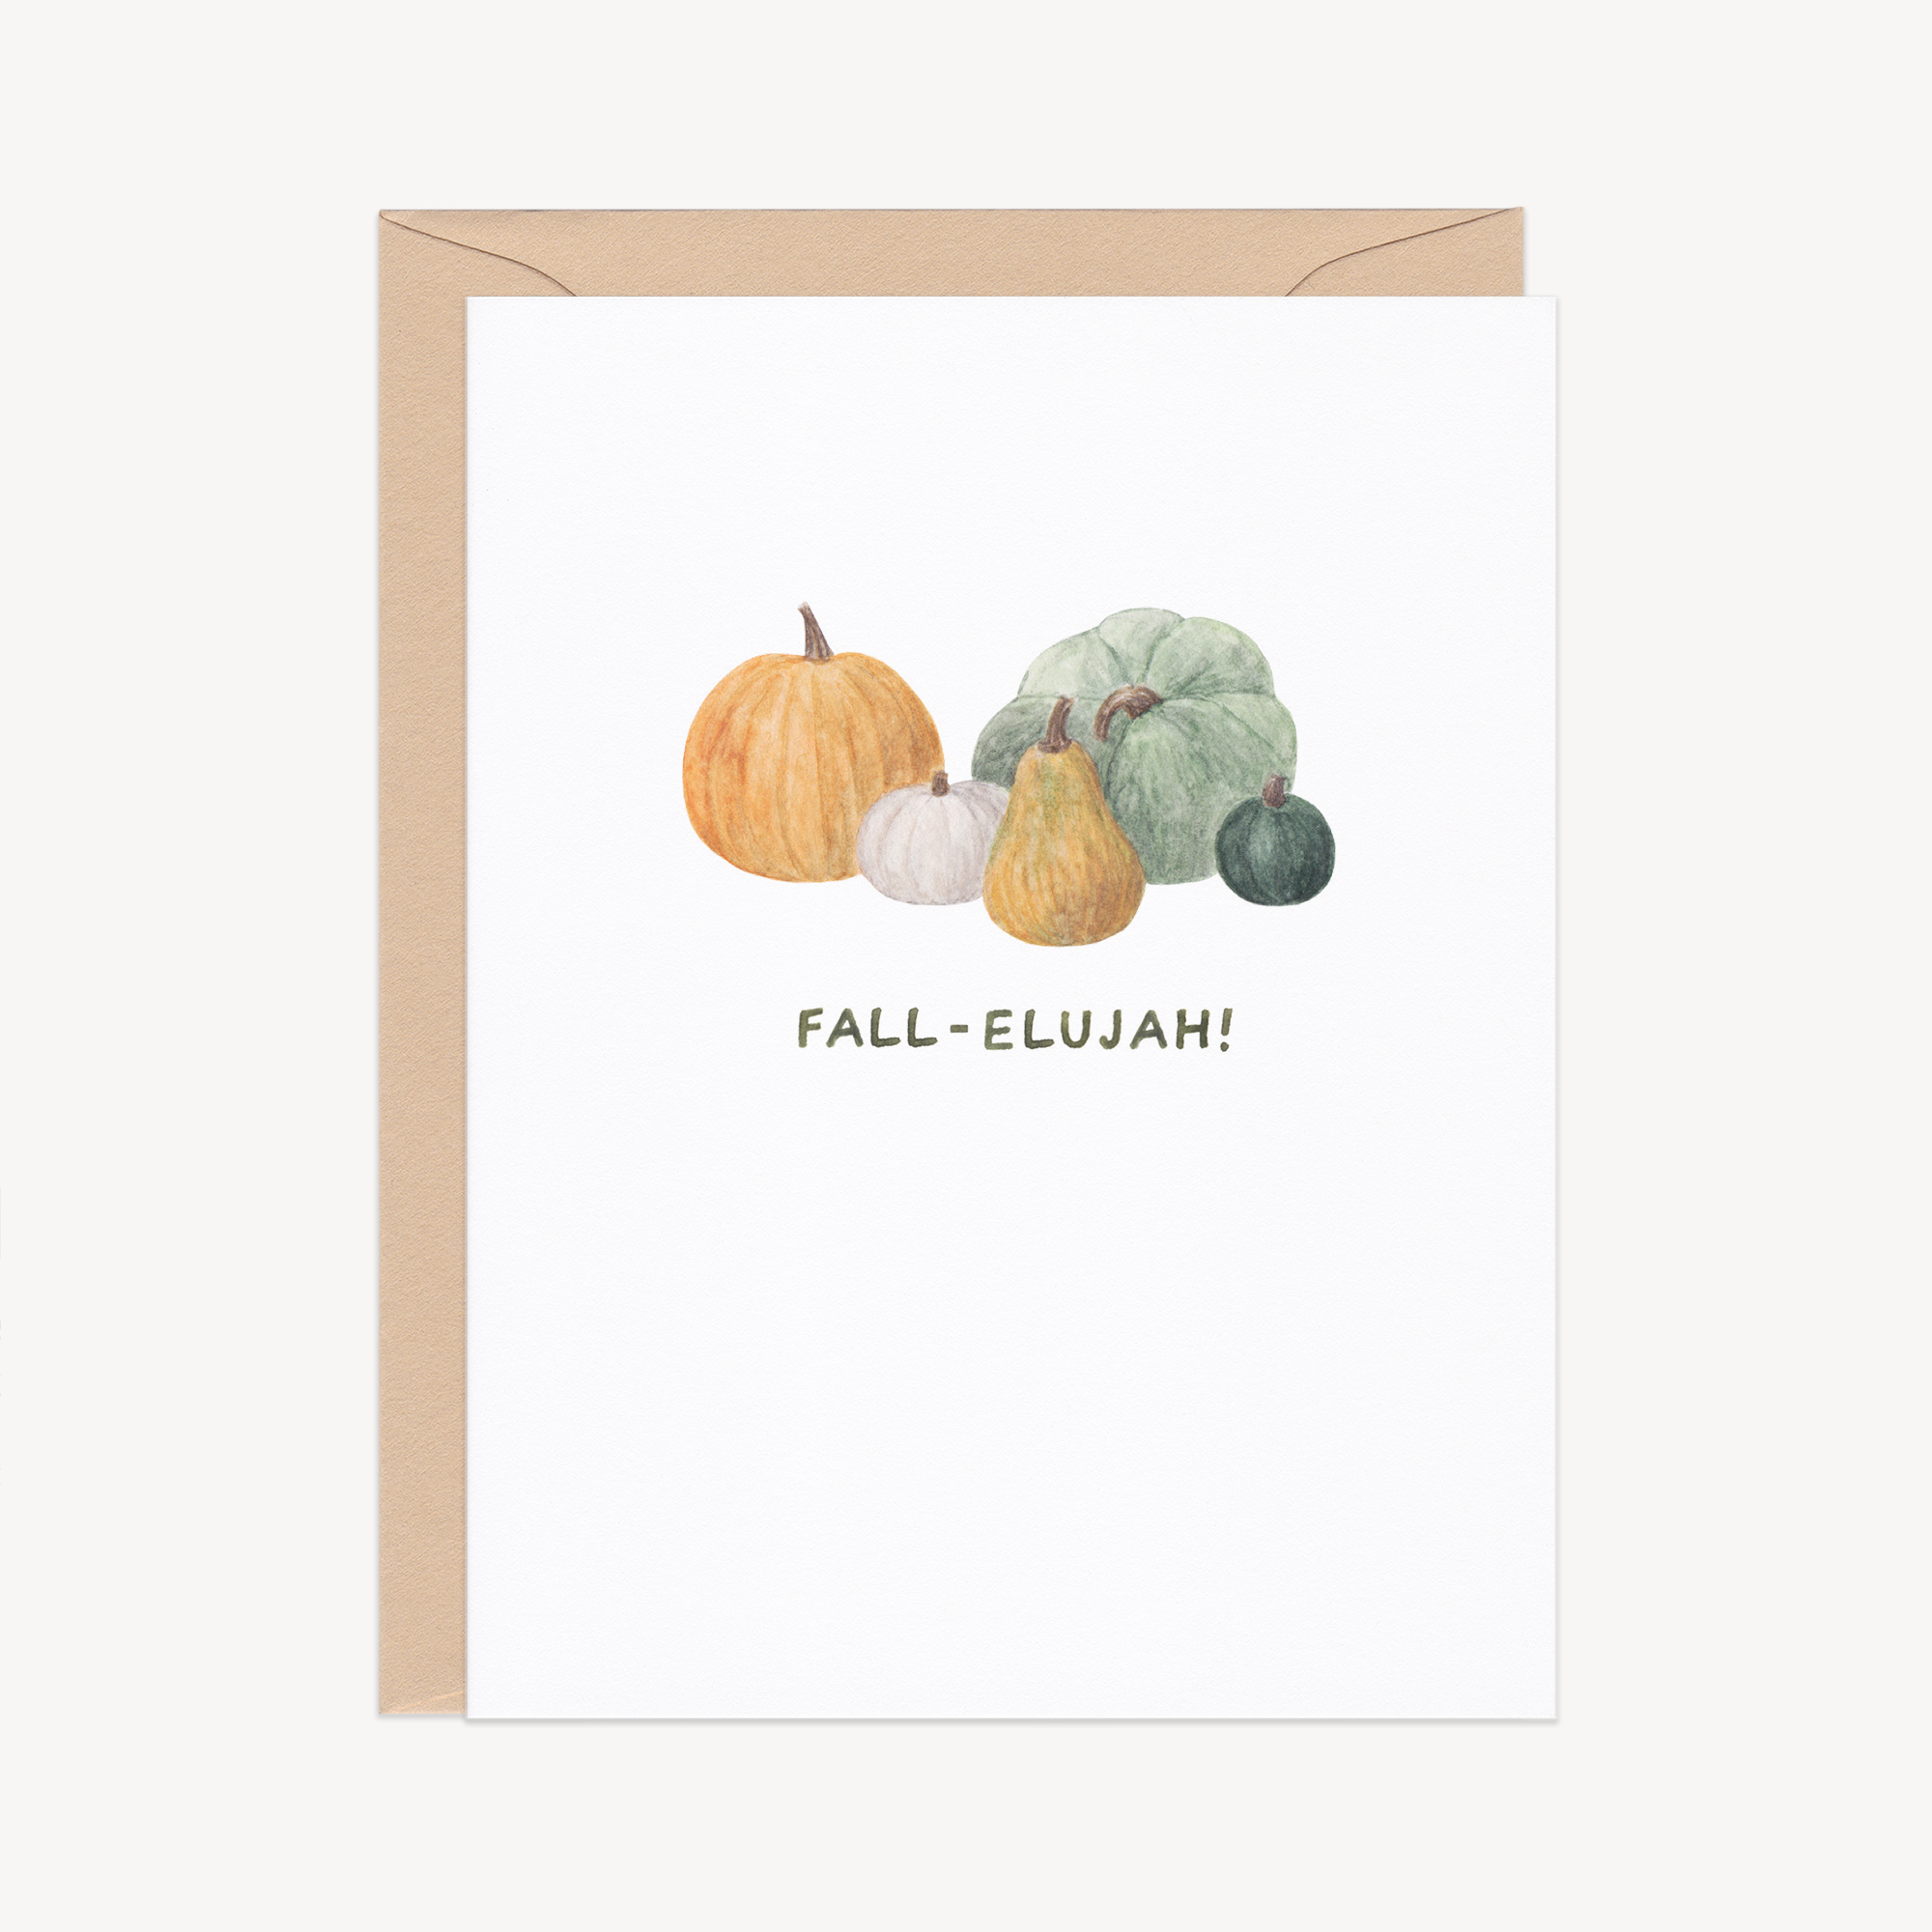 Fall-elujah Pumpkins Seasonal Card